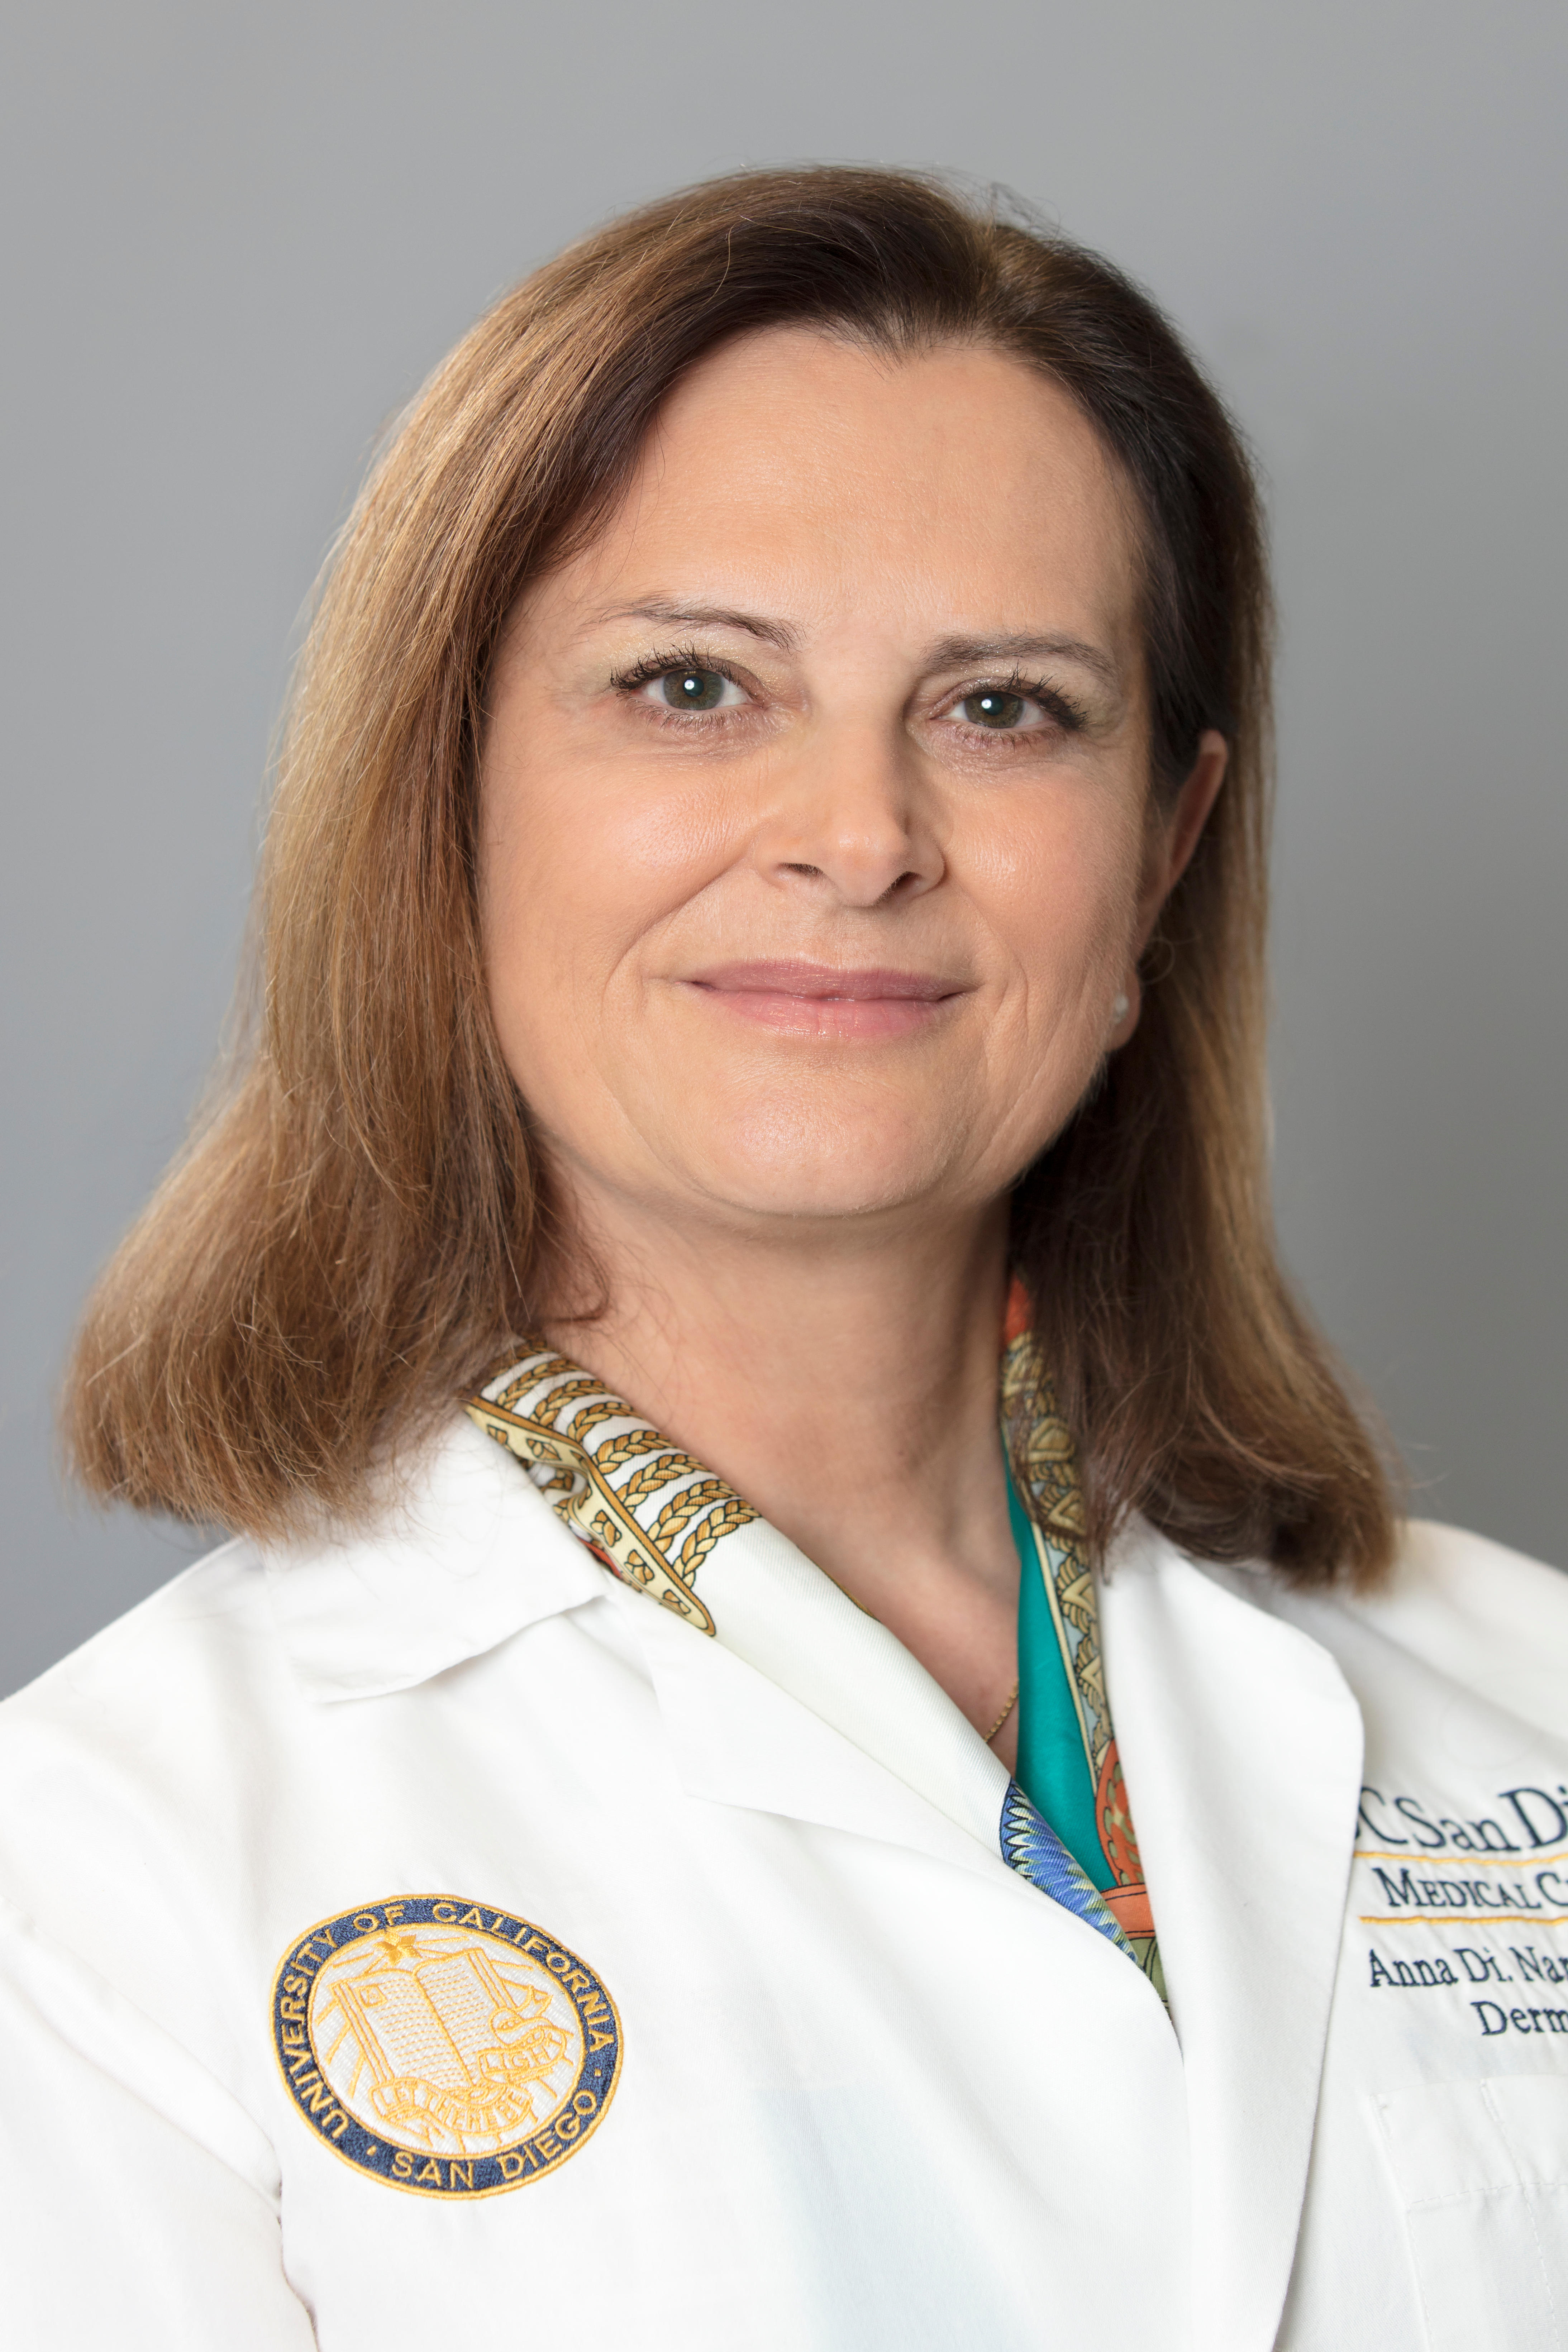 Dr. Anna Di Nardo, MD,PhD